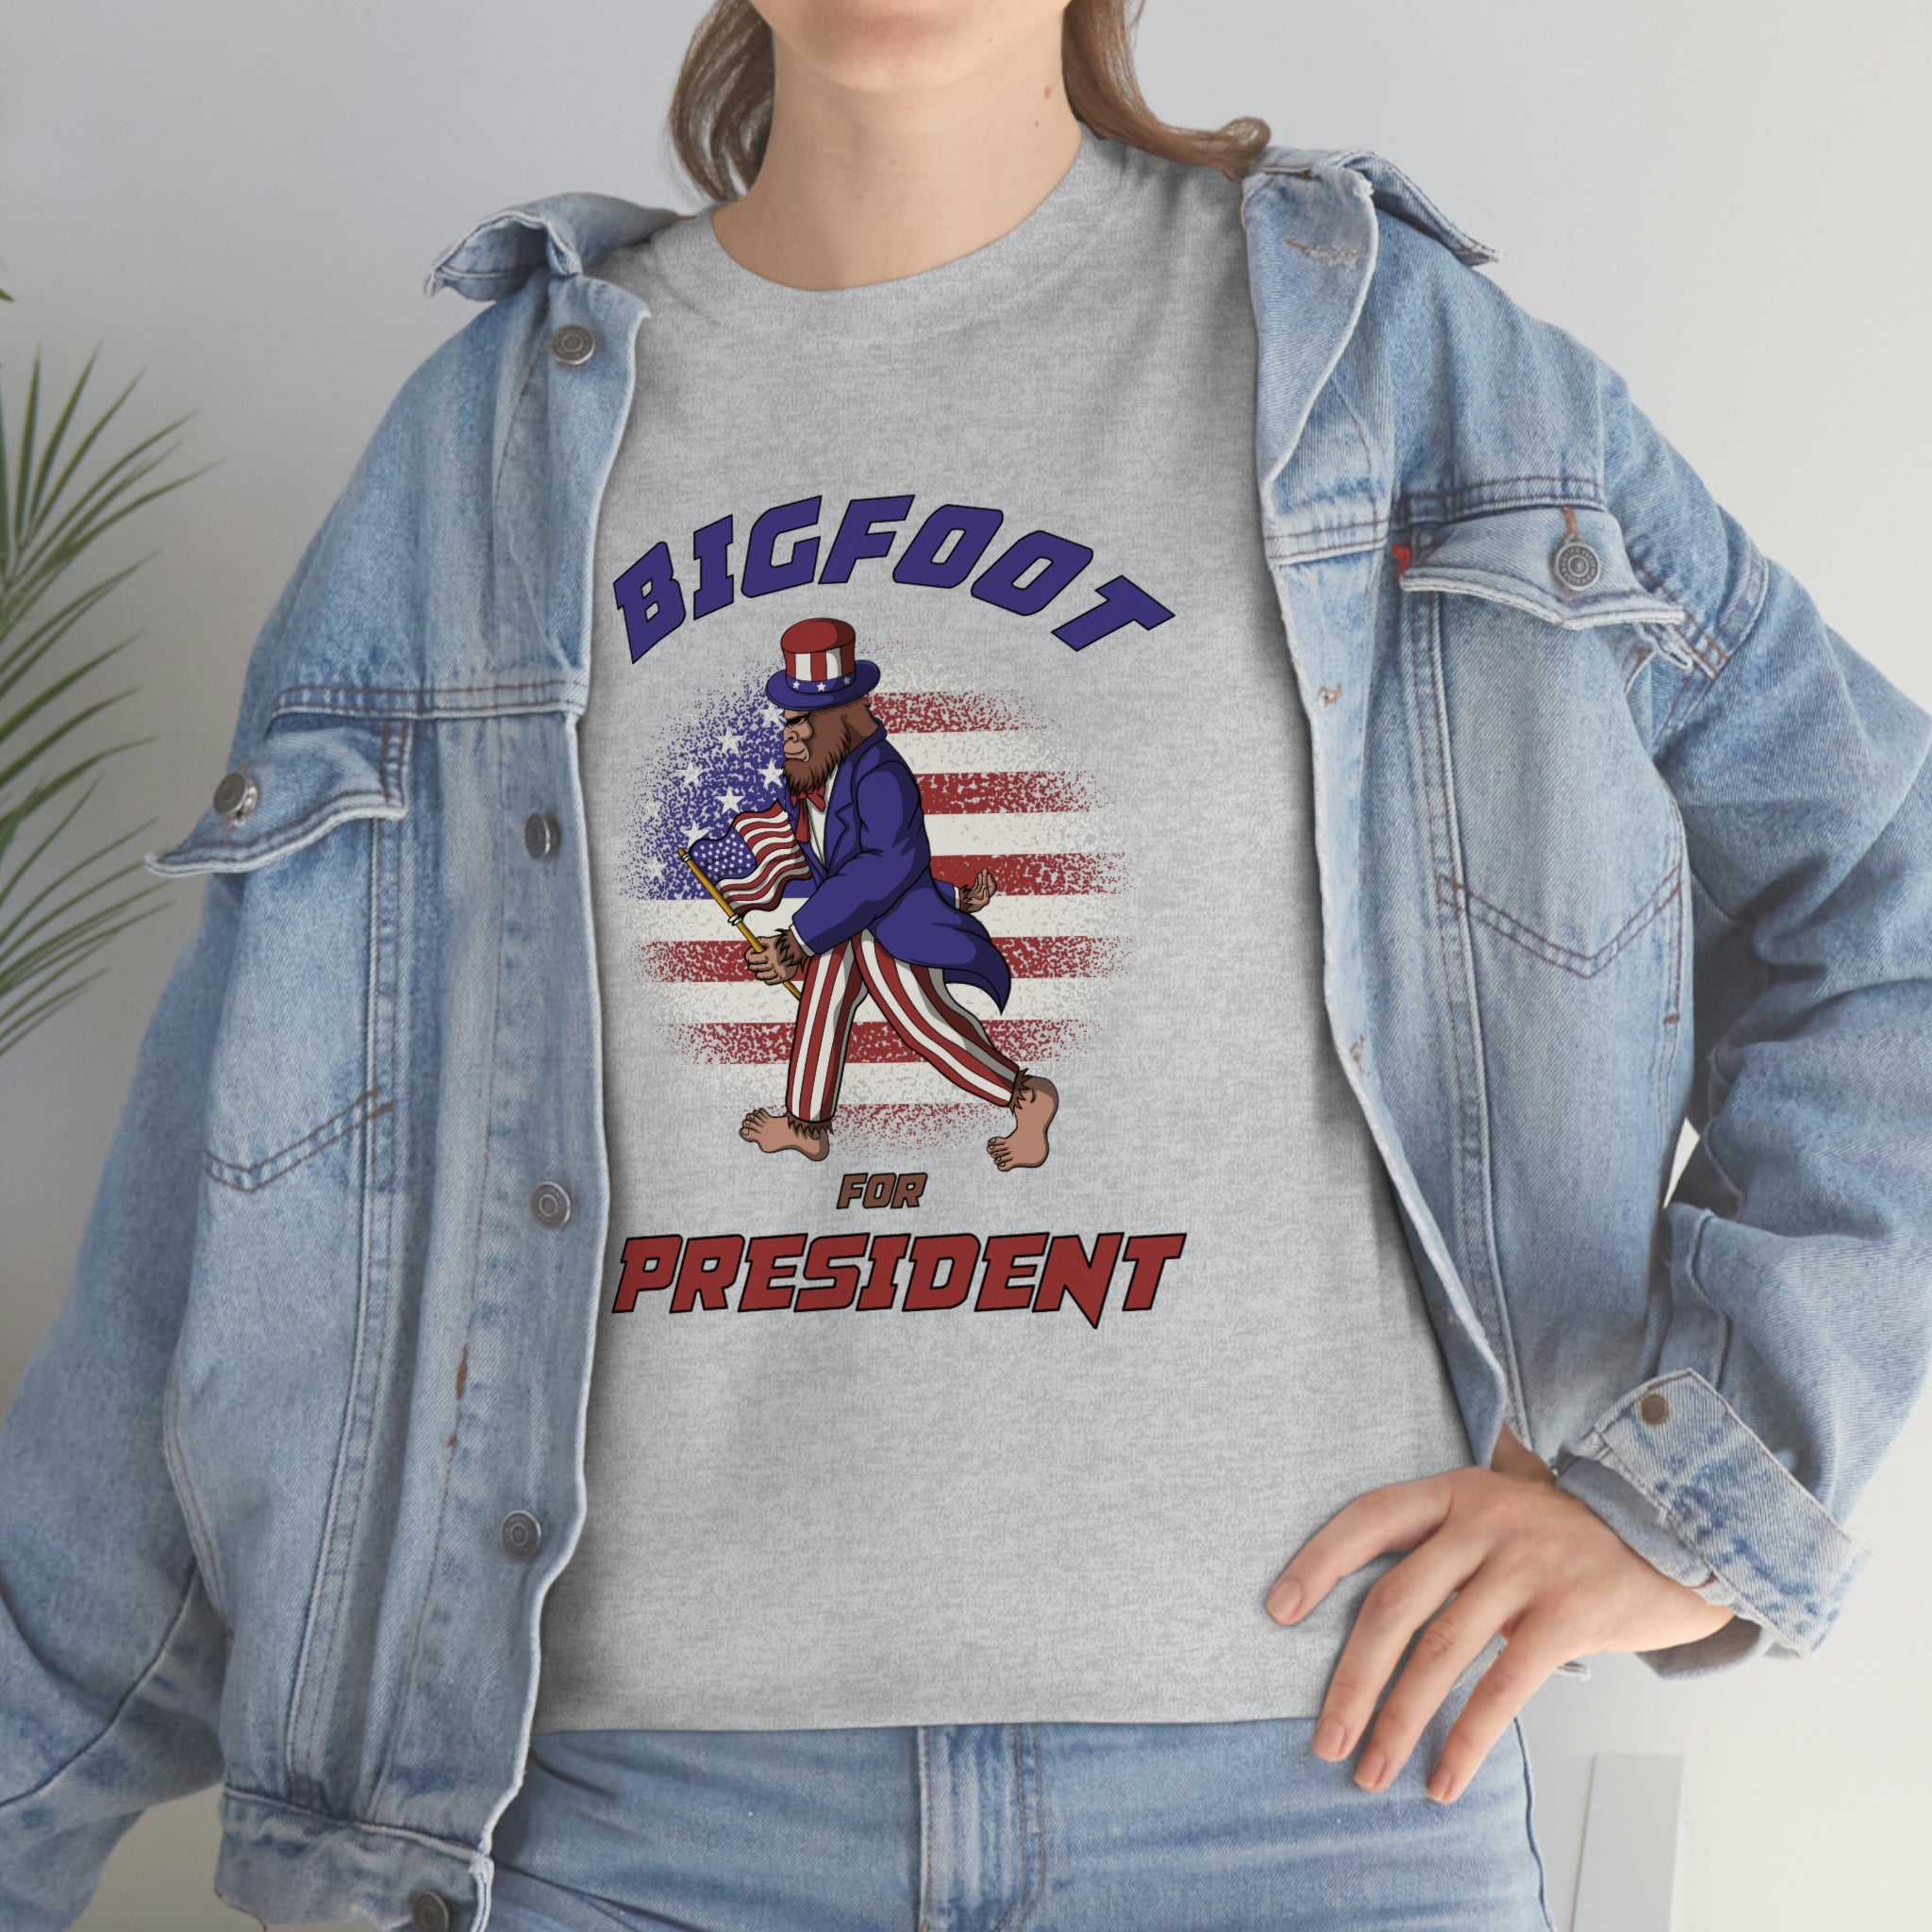 Bigfoot for President - Unisex Heavy Cotton Tee